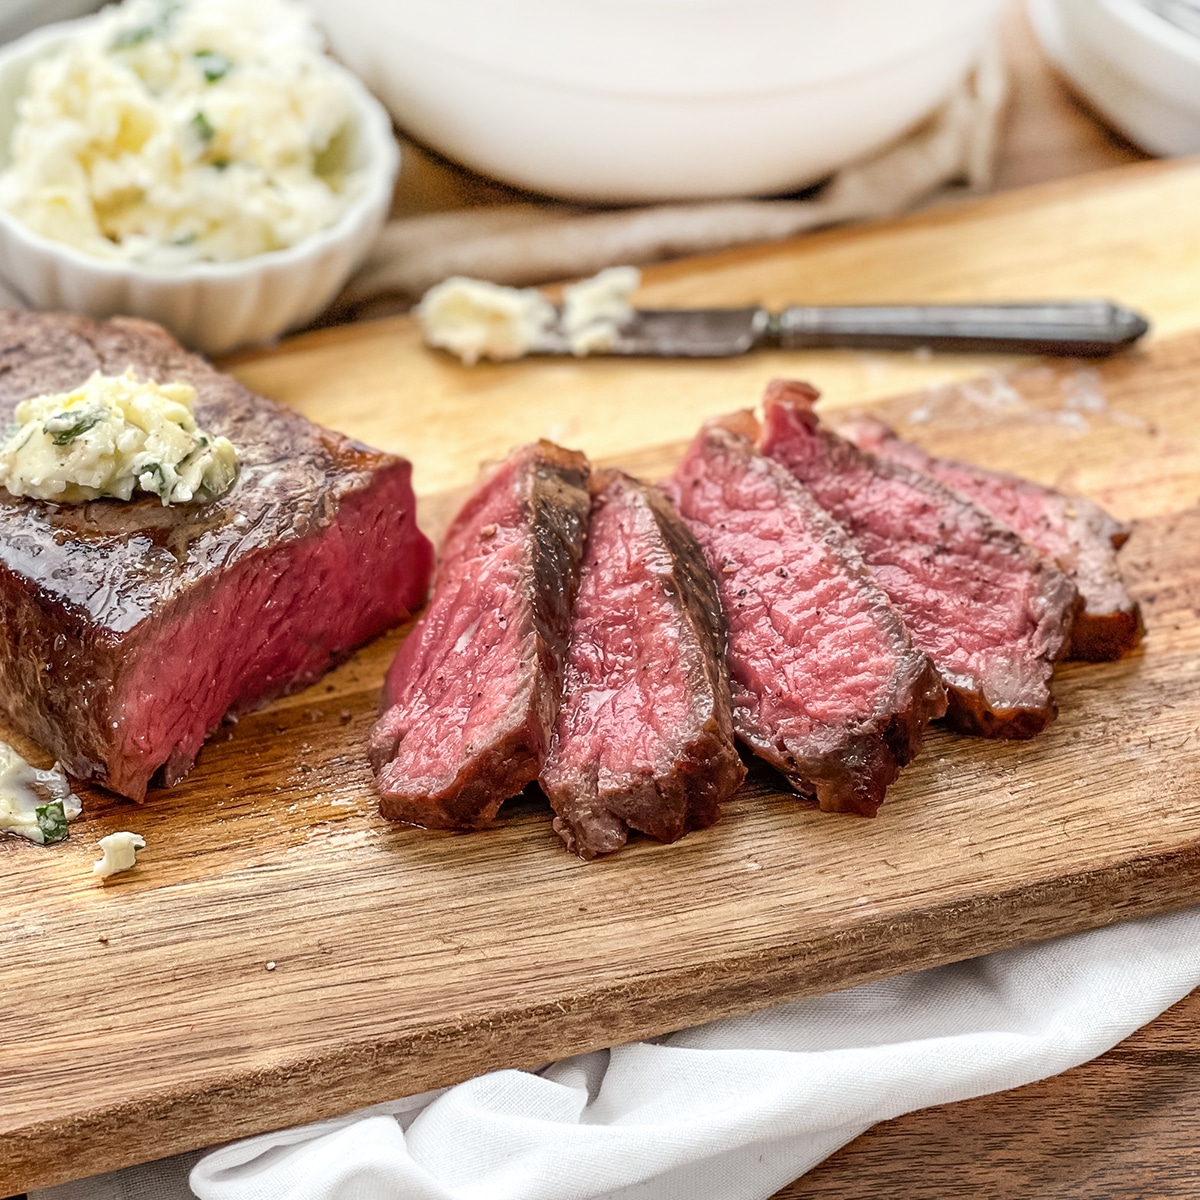 https://cookthestory.com/wp-content/uploads/2022/02/reverse-sear-steak-square-01.jpg